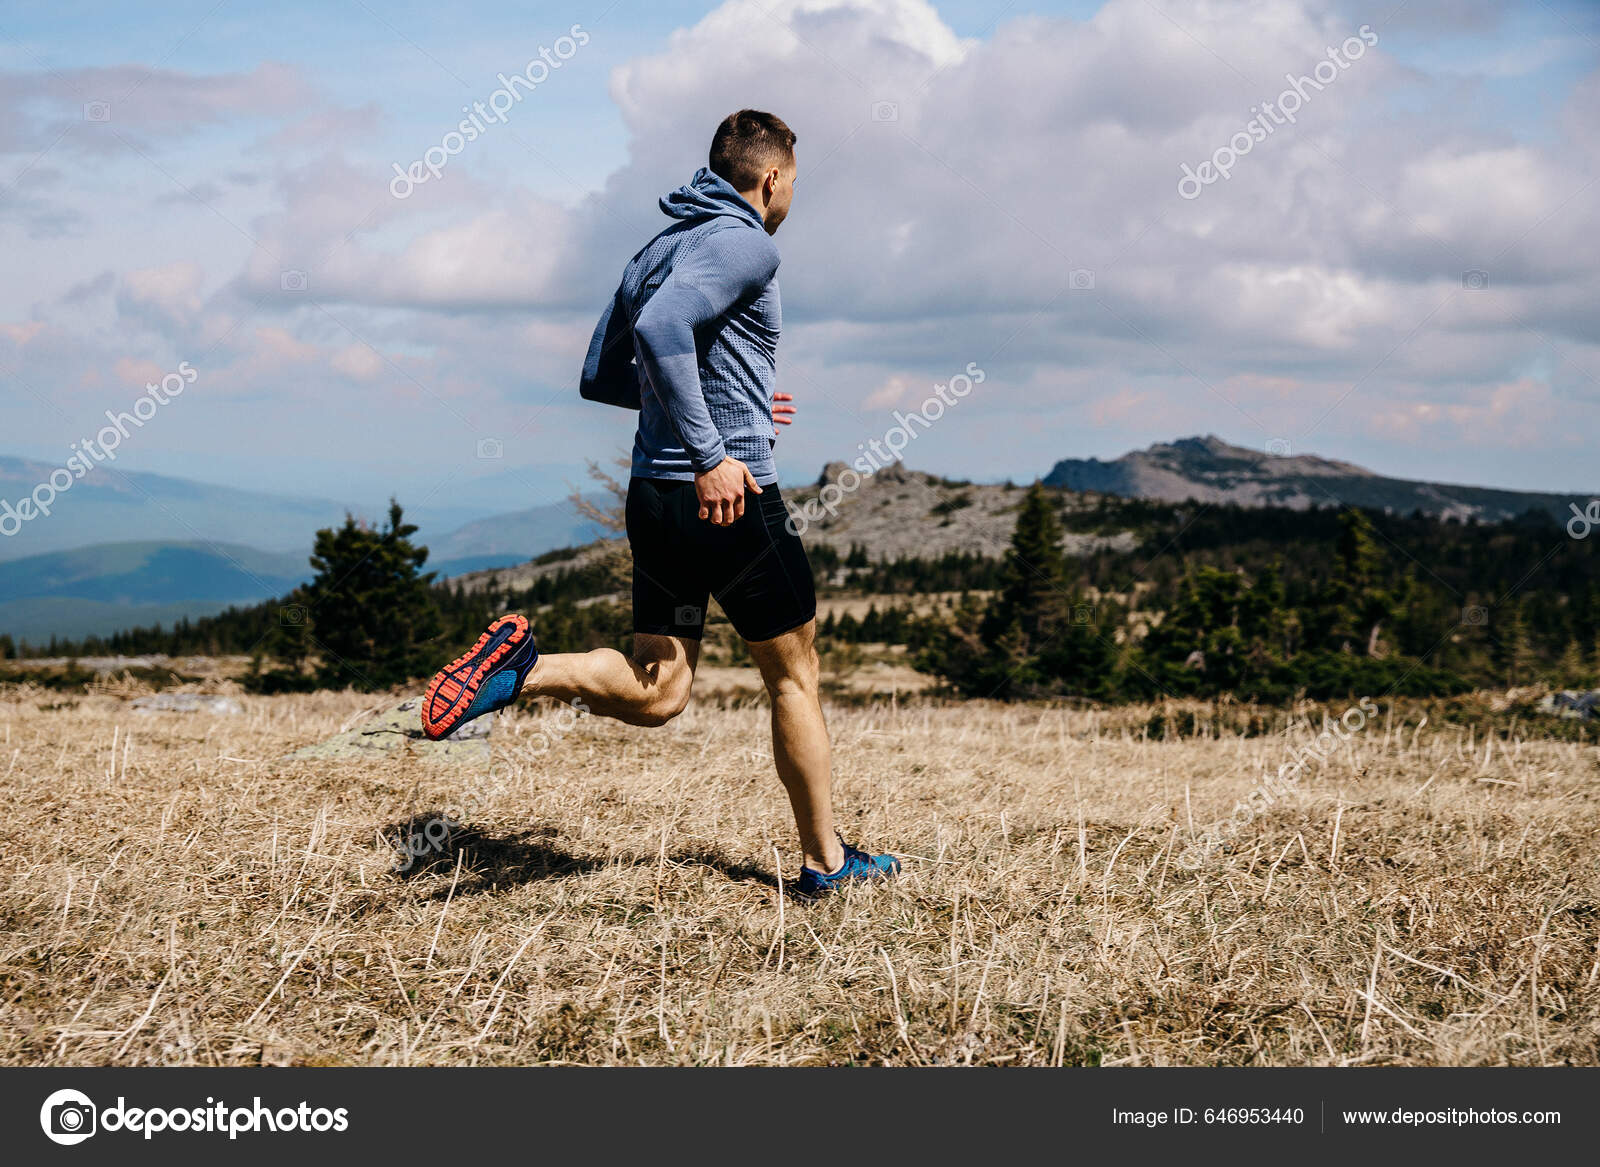 https://st5.depositphotos.com/76427568/64695/i/1600/depositphotos_646953440-stock-photo-man-runner-running-mountain-trail.jpg